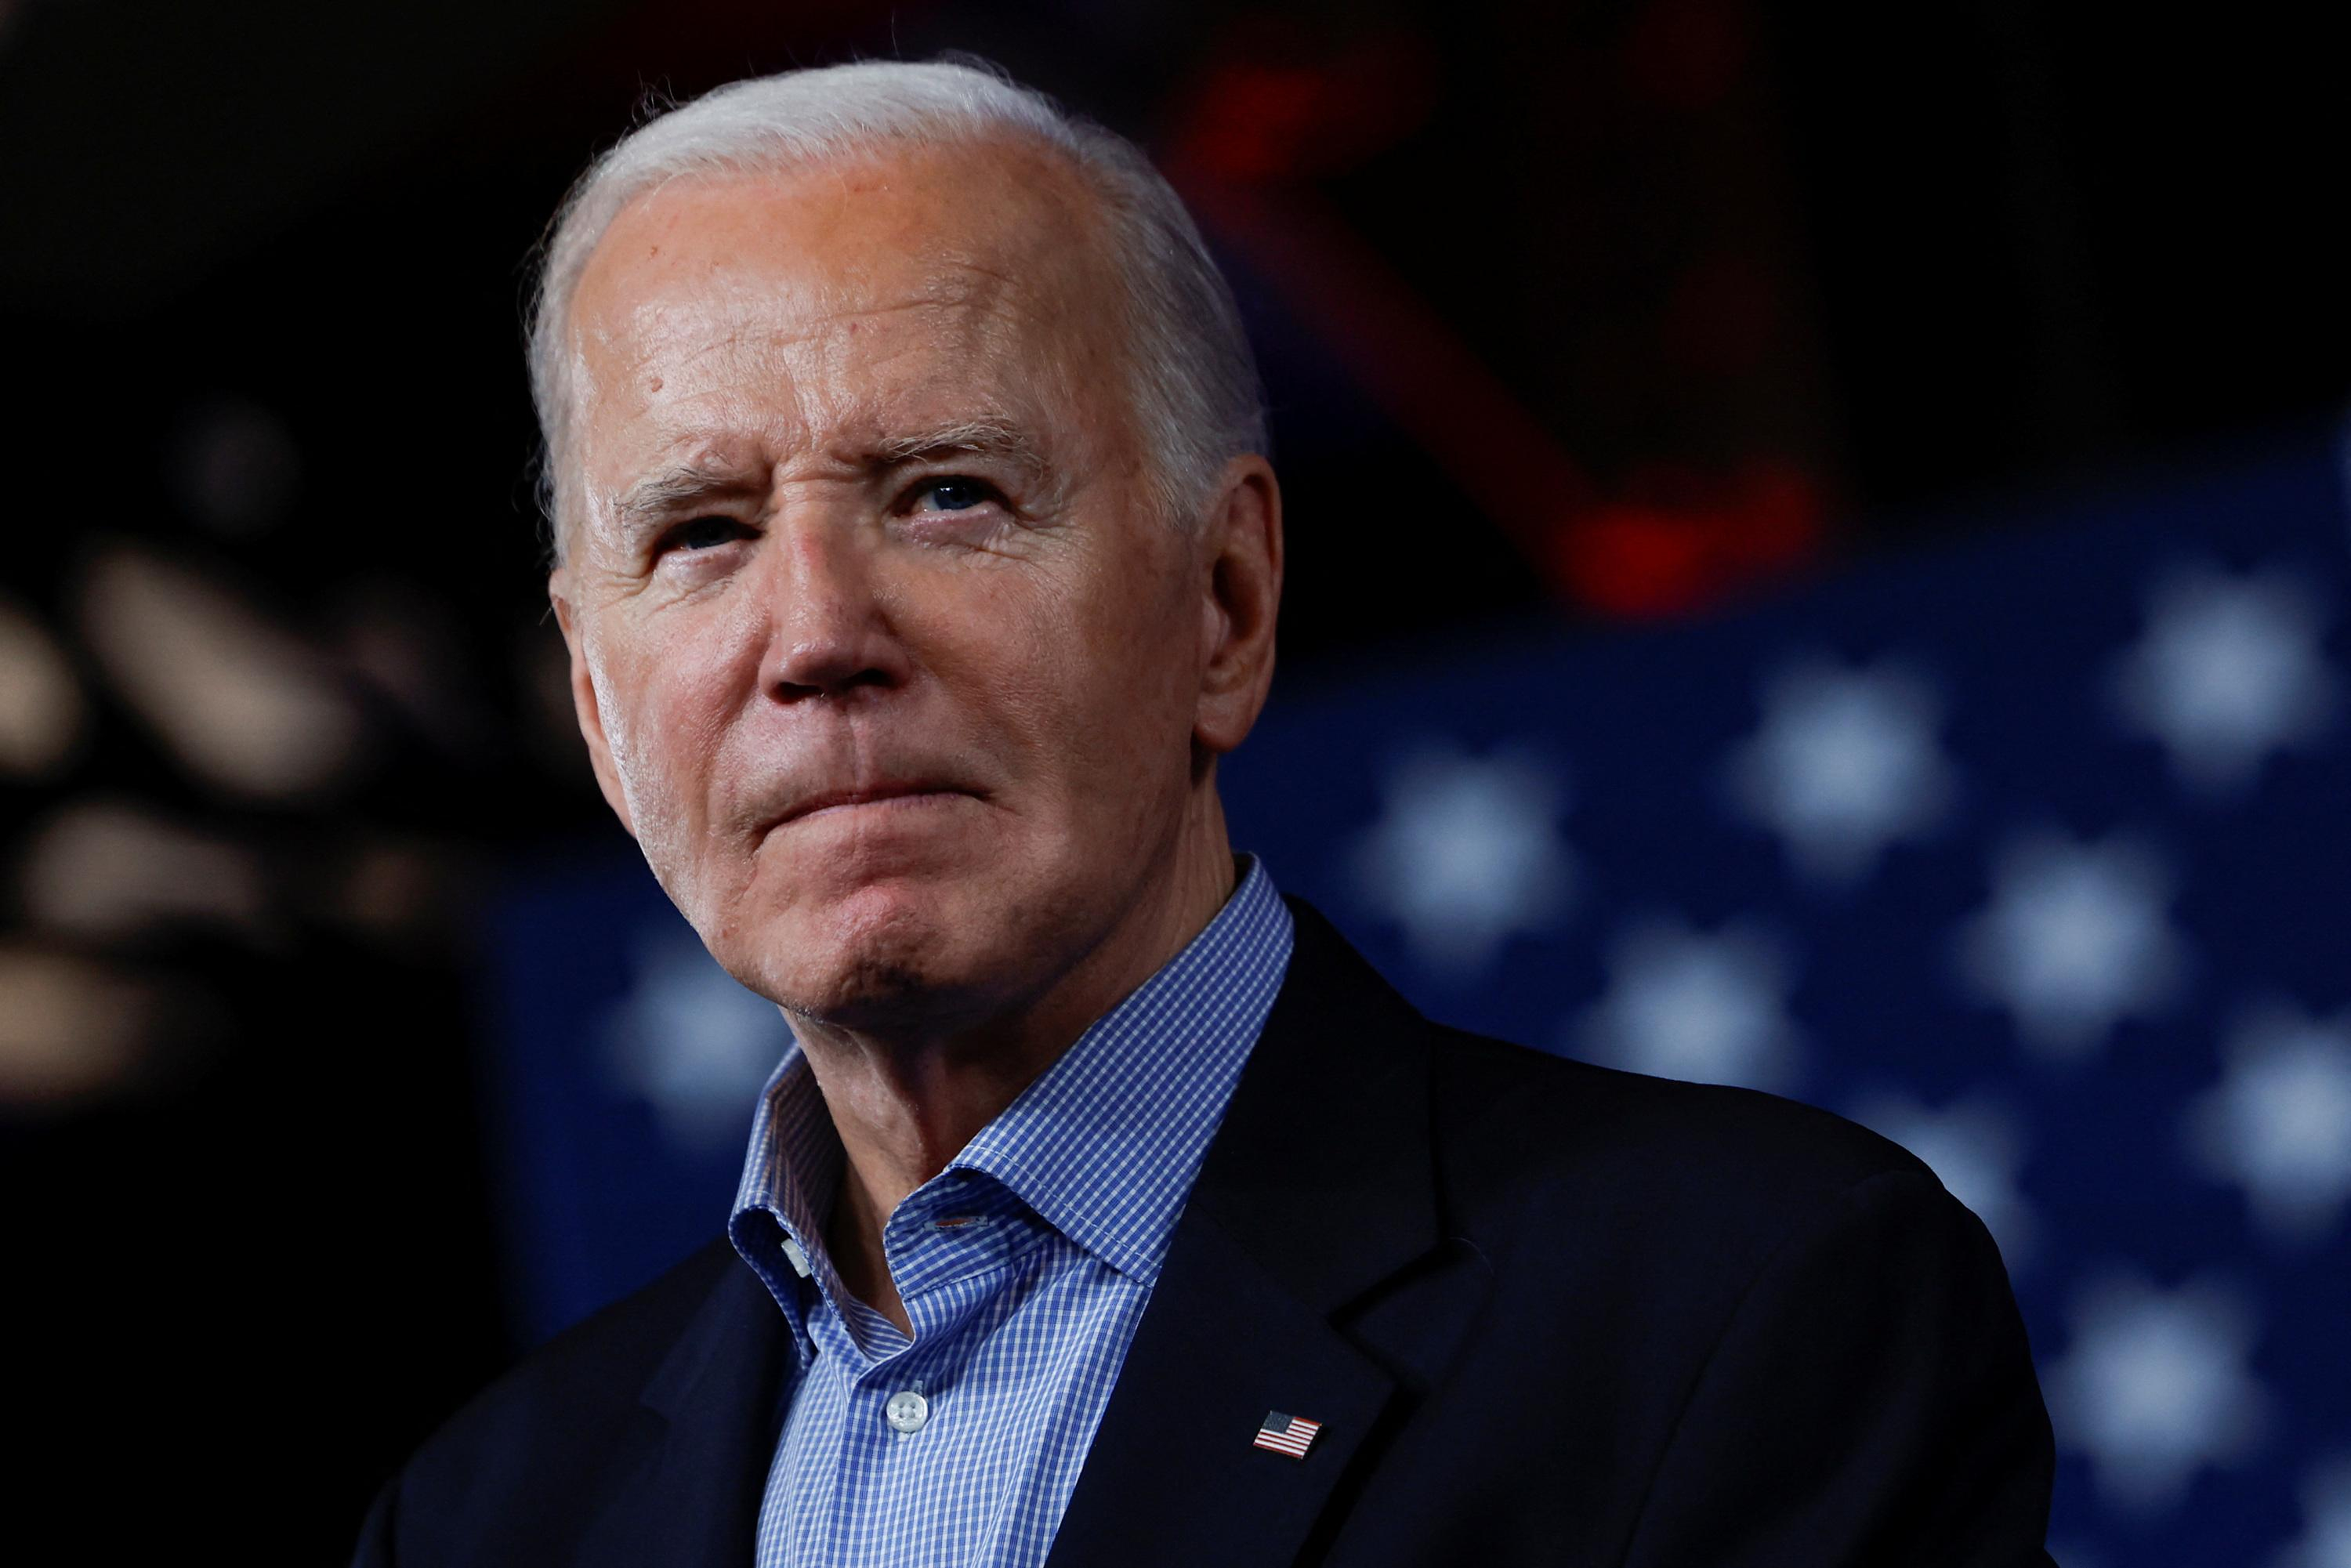 United States: Joe Biden's effigy beaten by participants in a Republican event